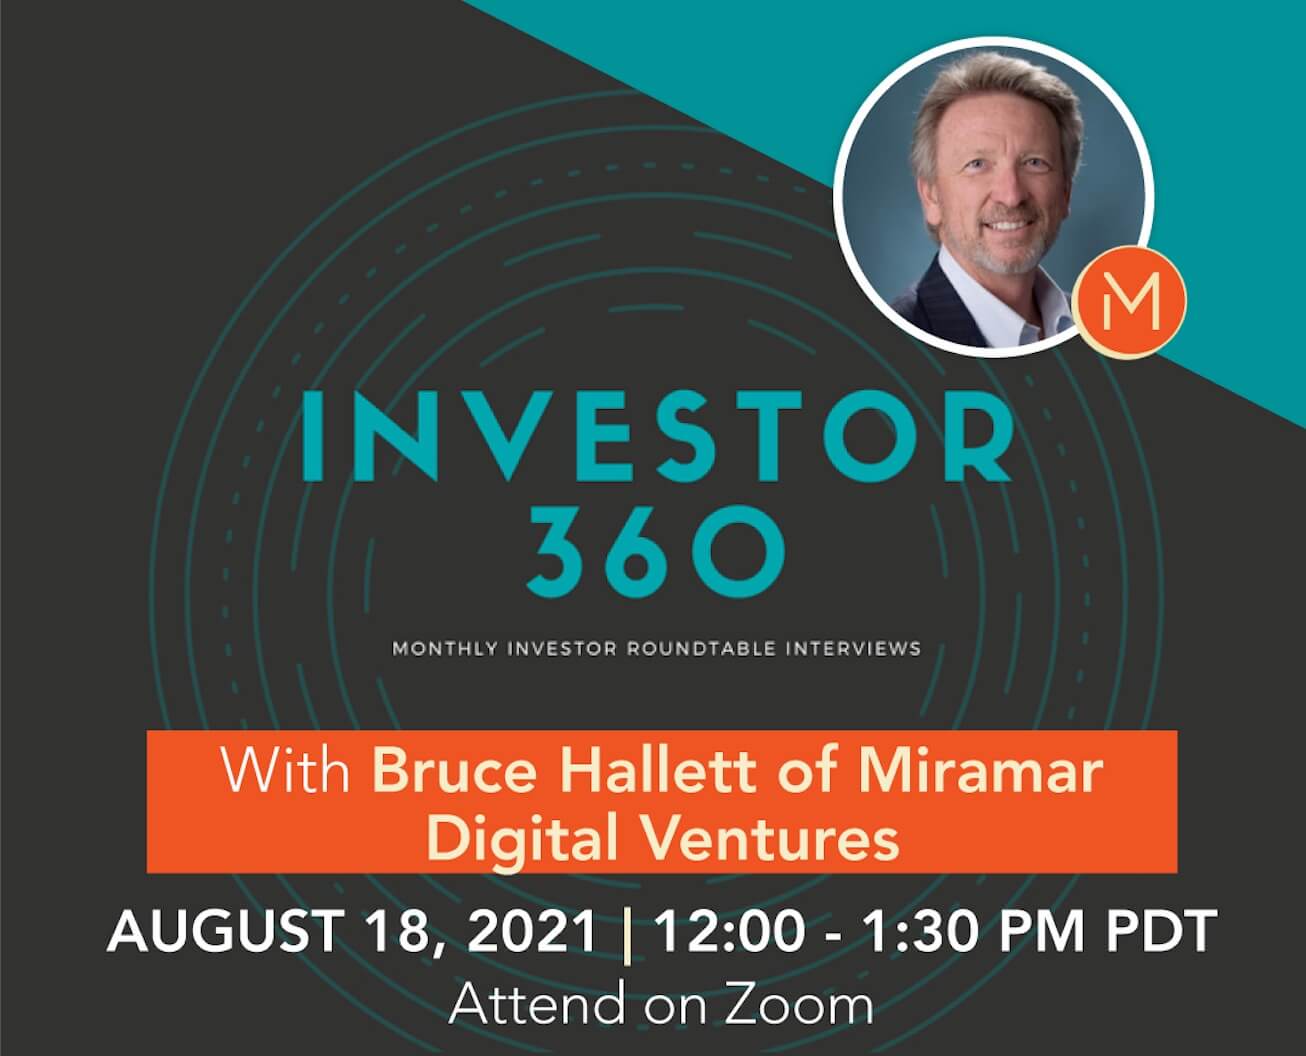 Investor 360: Monthly Investor Roundtable Interview with Bruce Hallett of Miramar Digital Ventures